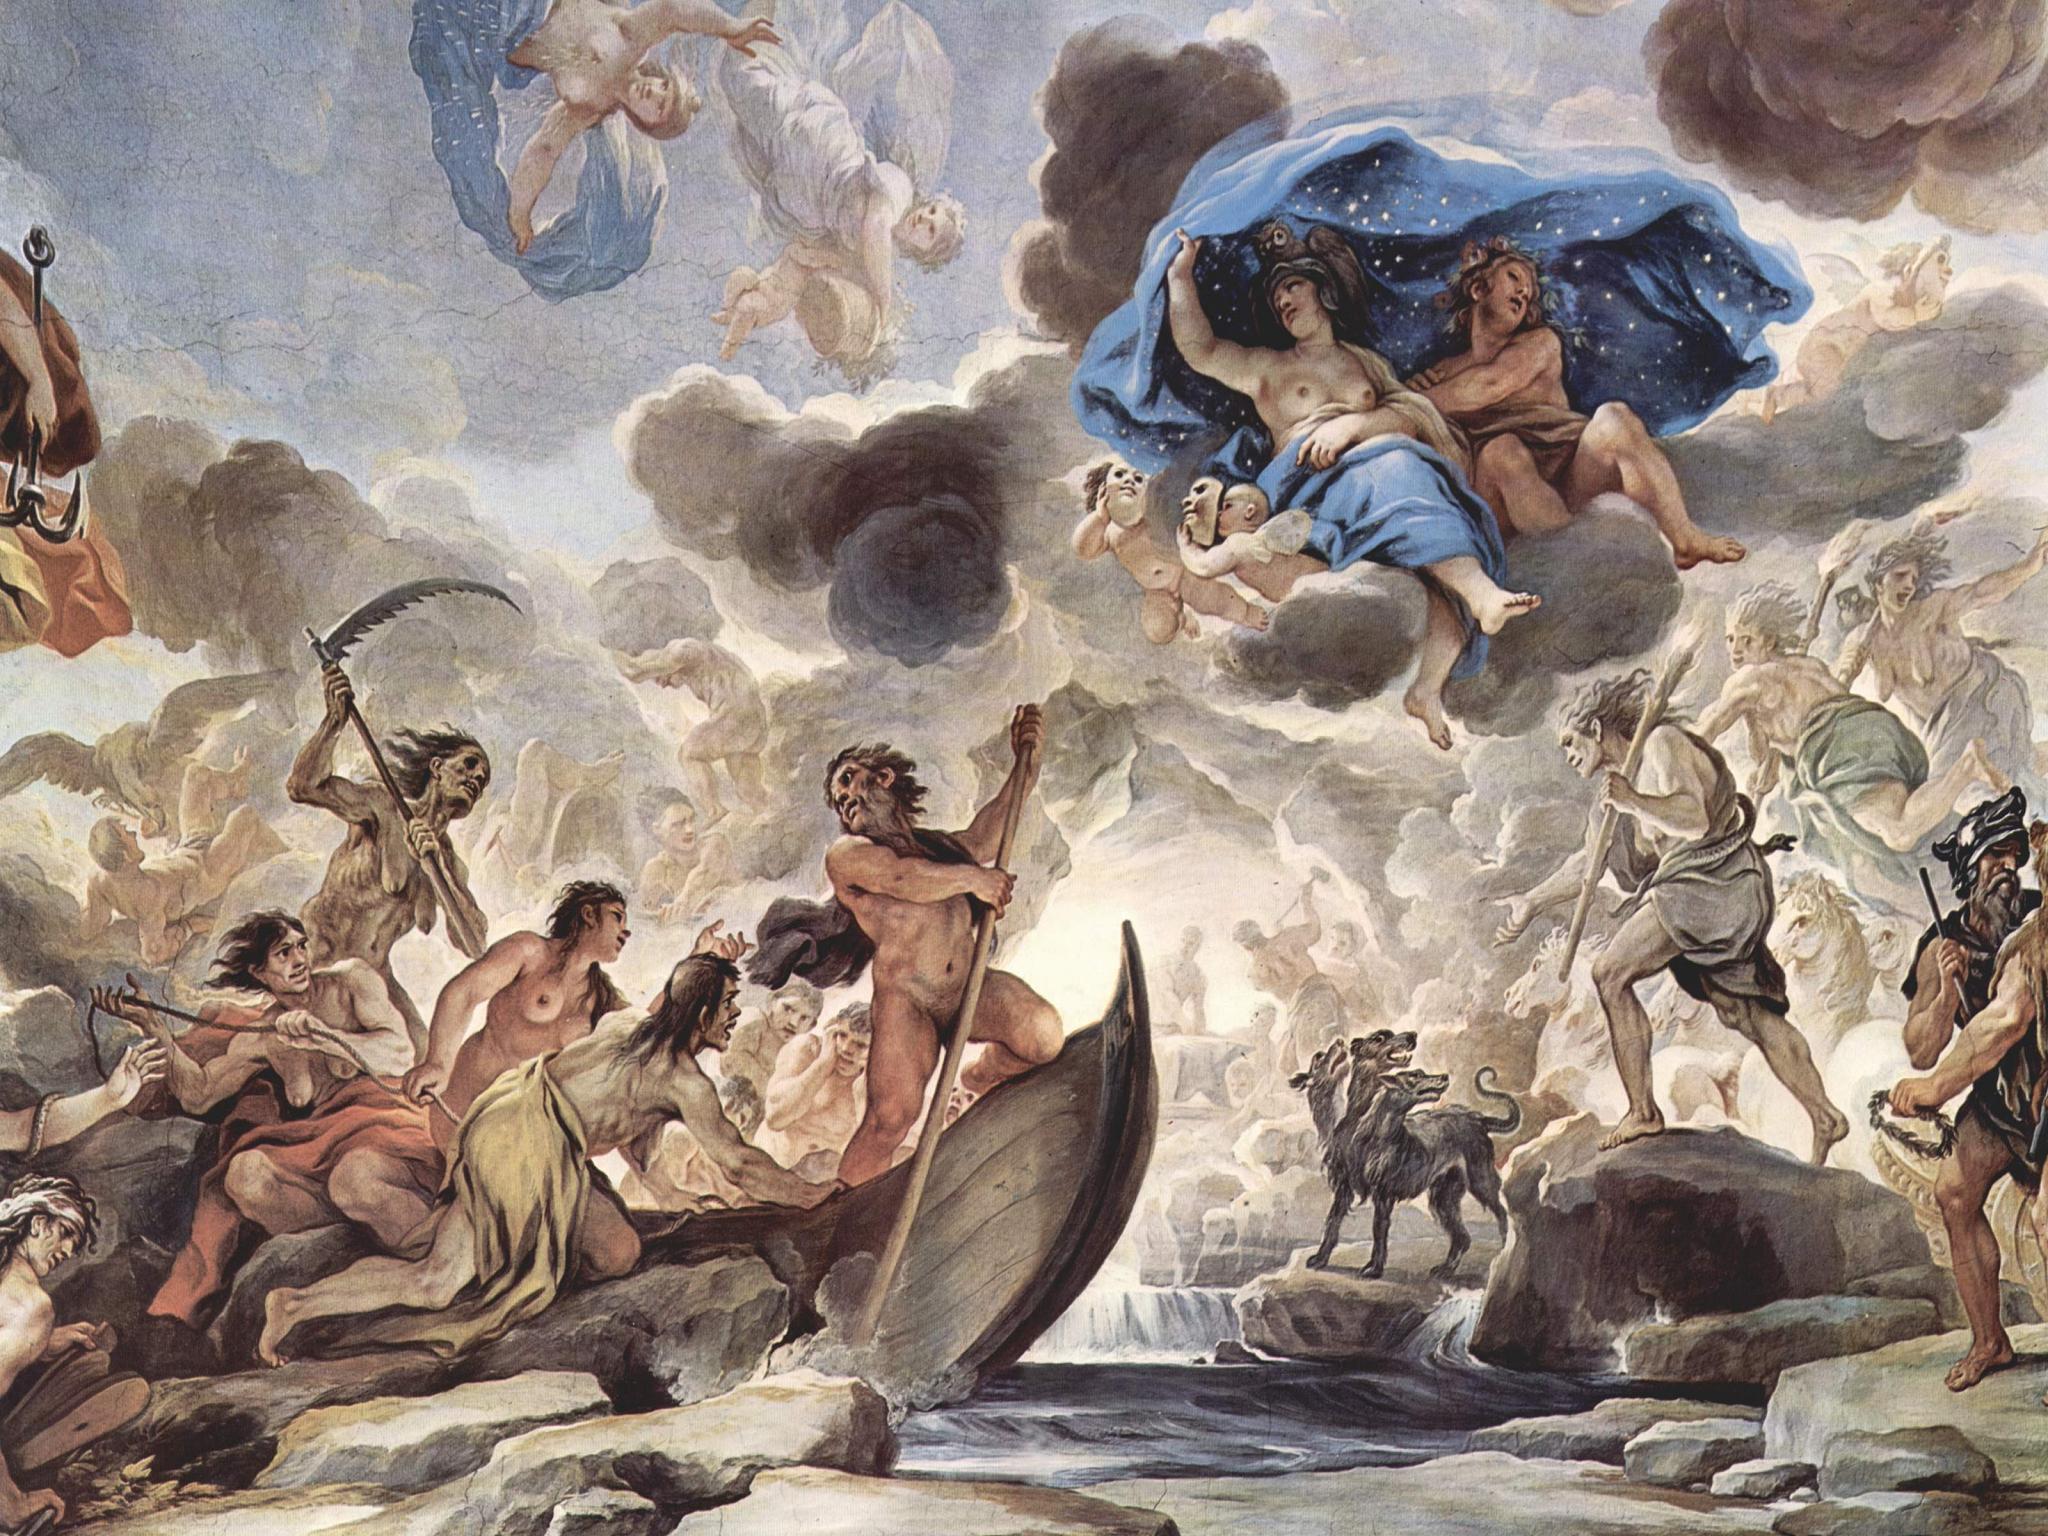 66+] Greek Mythology Wallpapers - WallpaperSafari